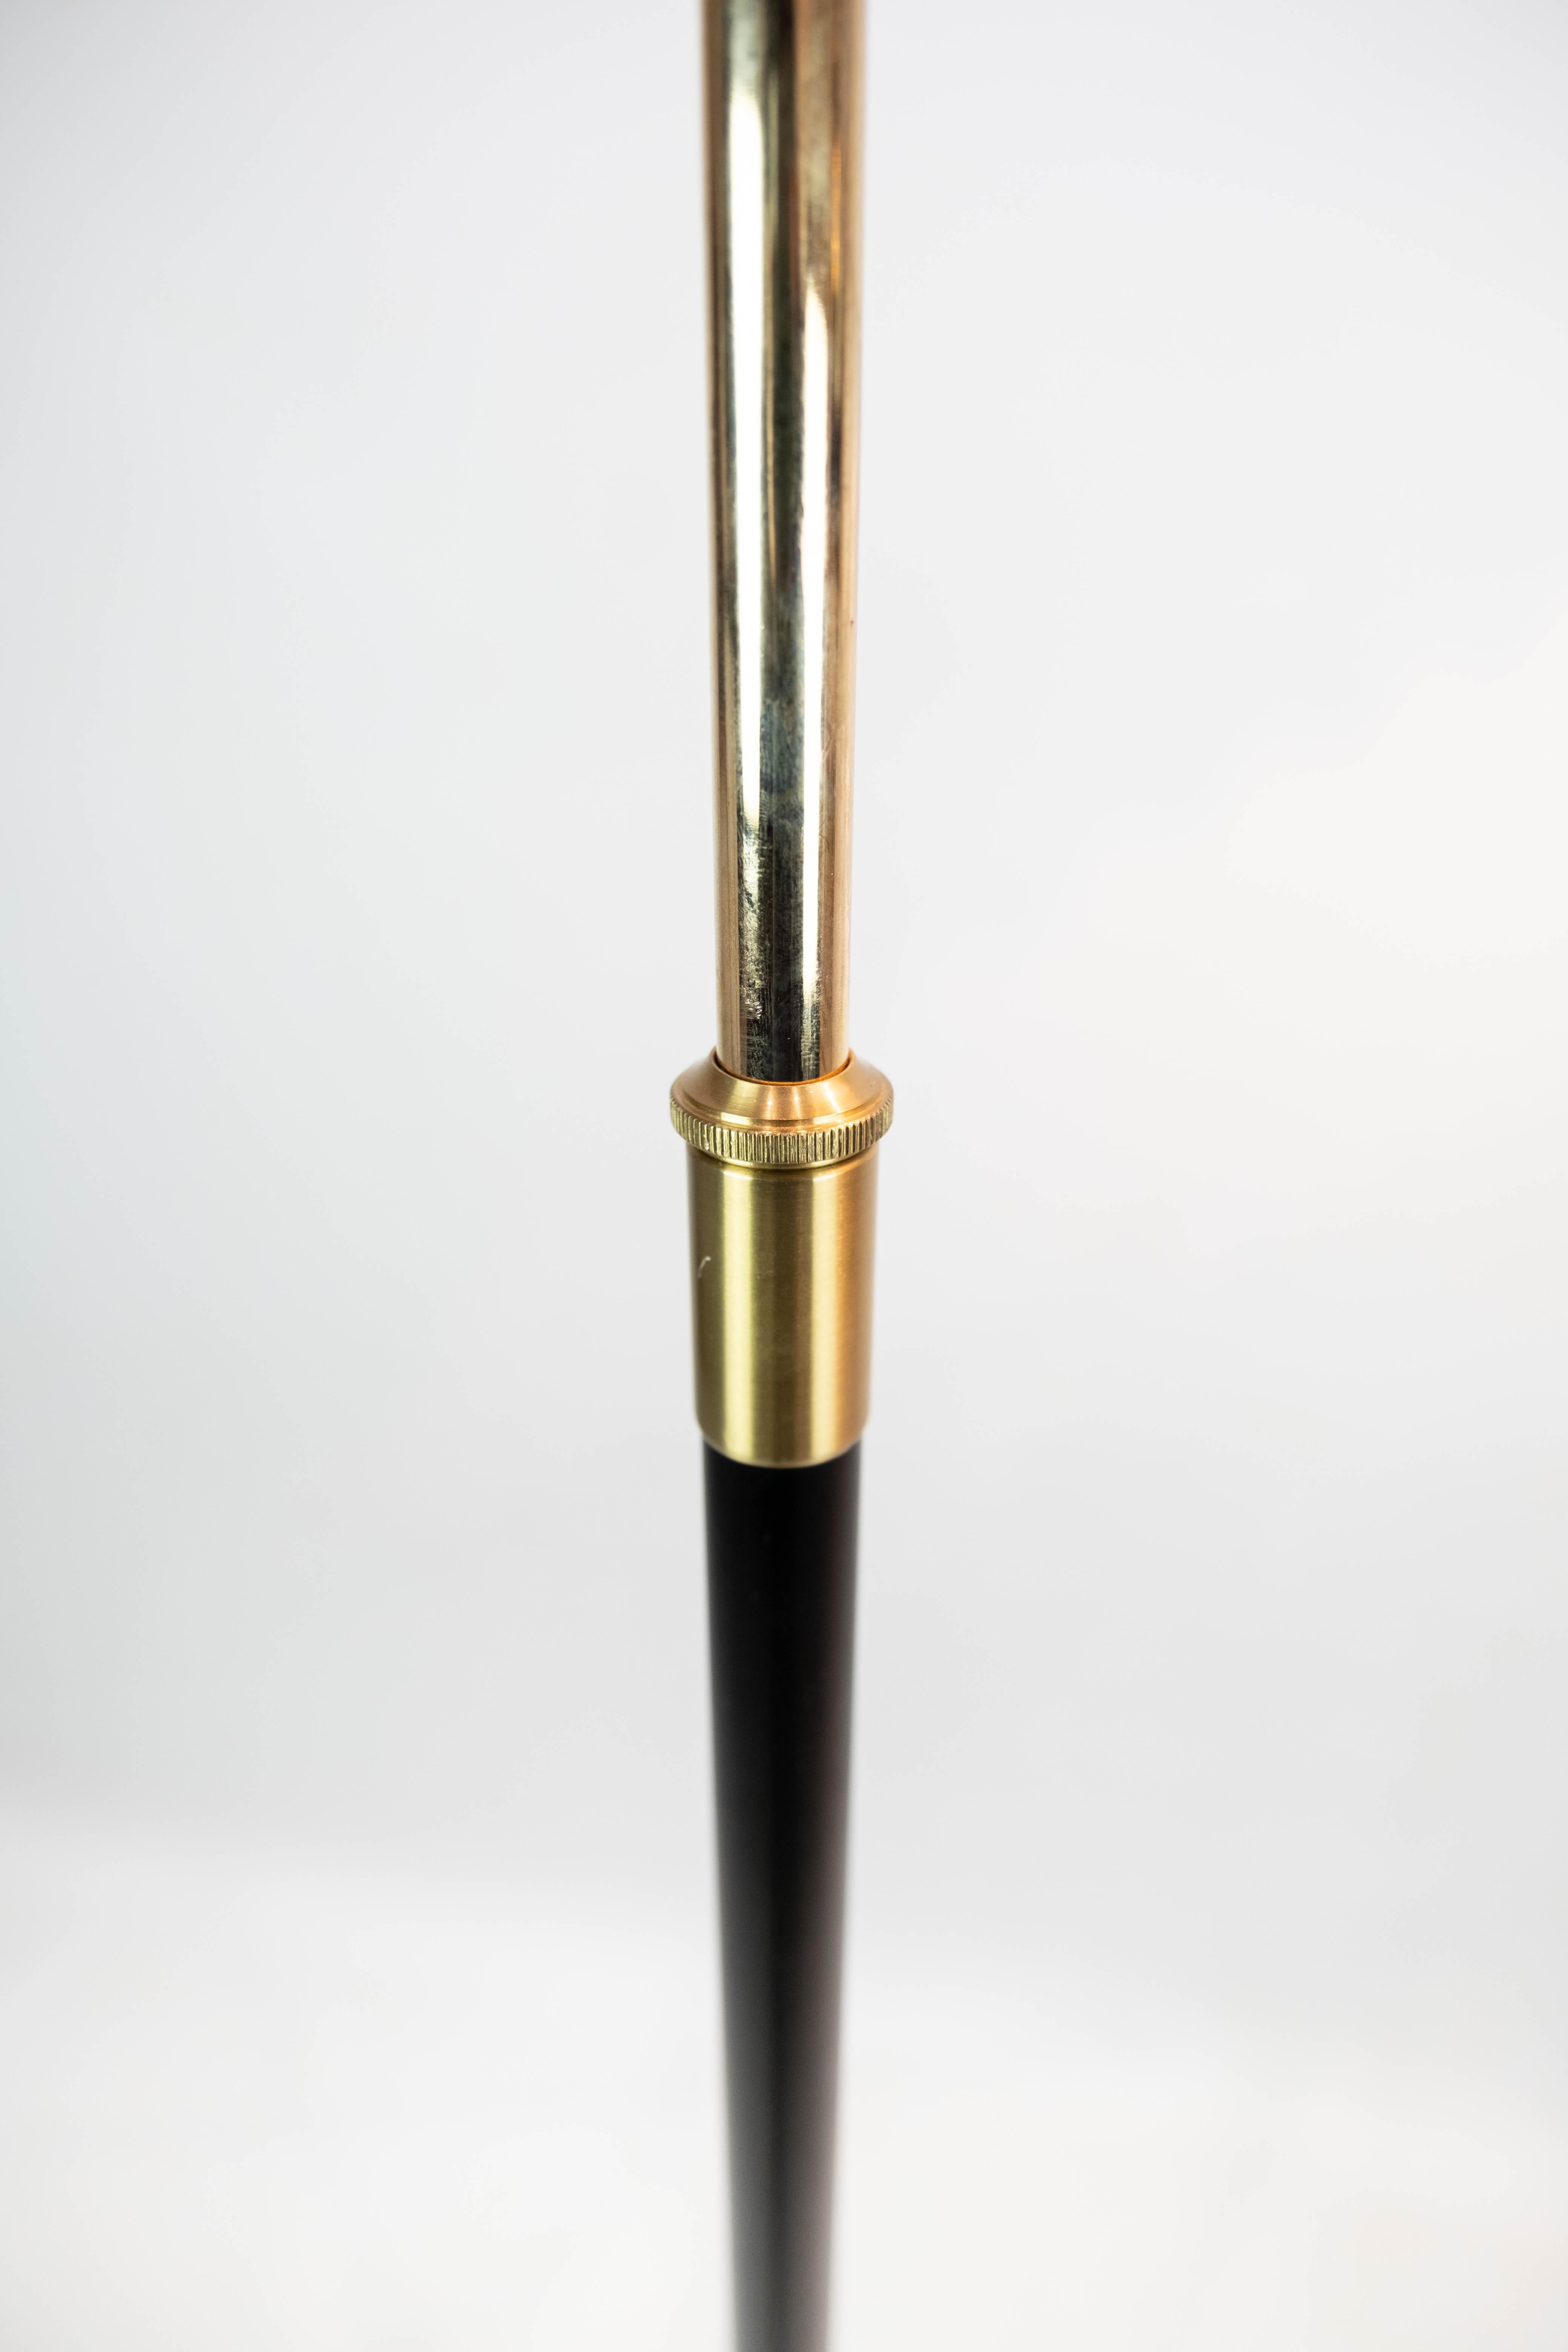 Floor Lamp, Model 349, in Brass and Black Metal, by Le Klint 1